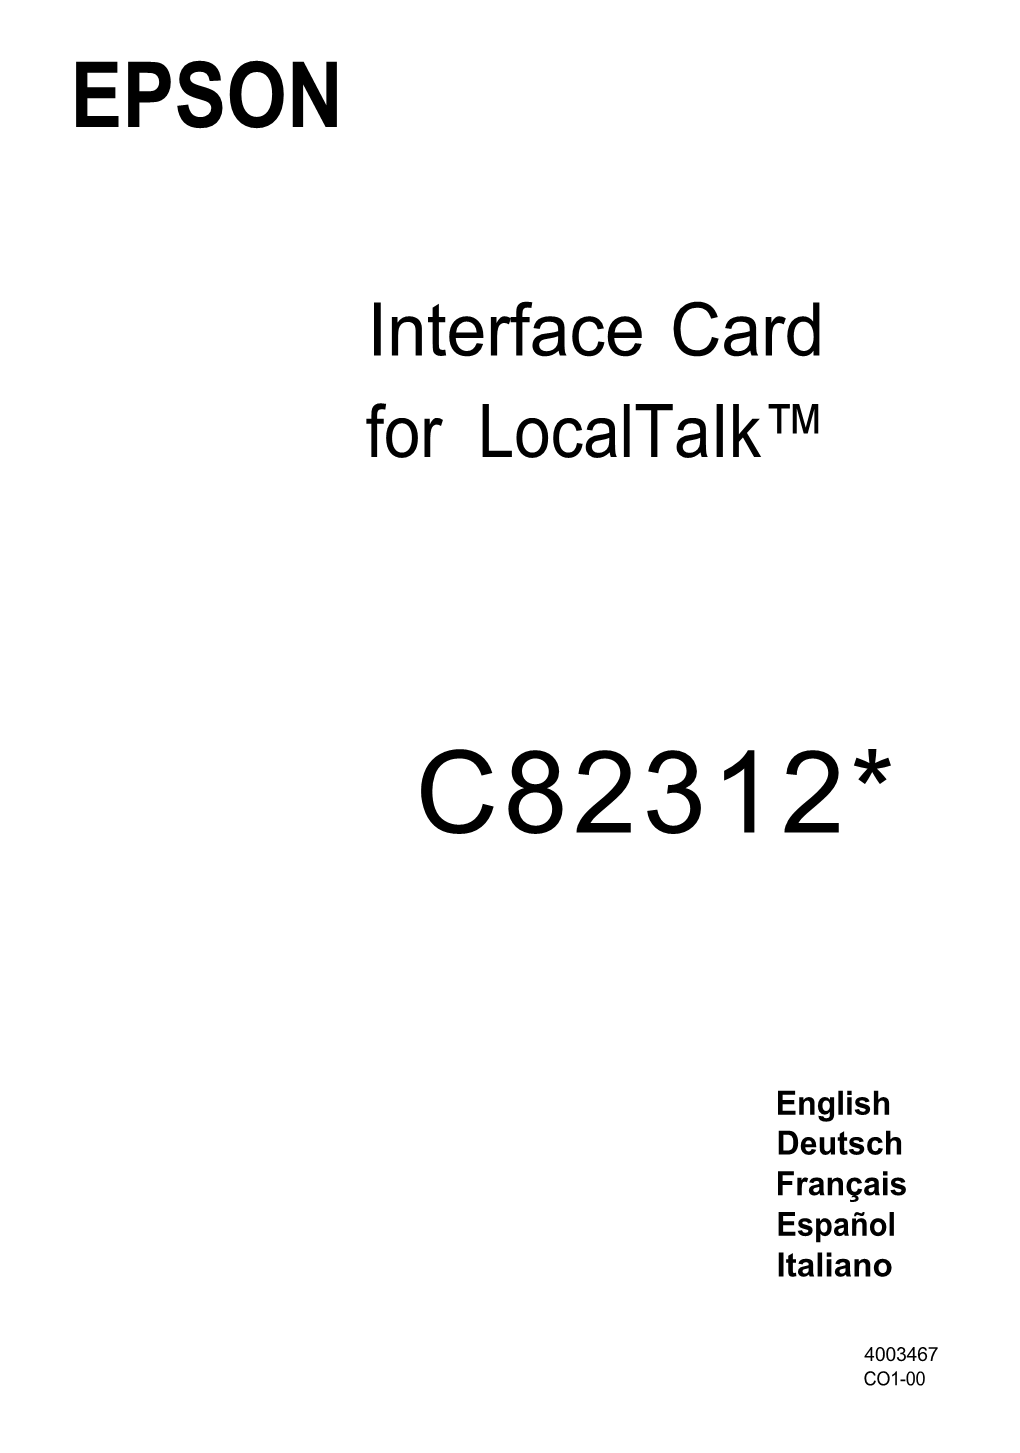 Localtalk Is a Trademark of Apple Computer, Inc